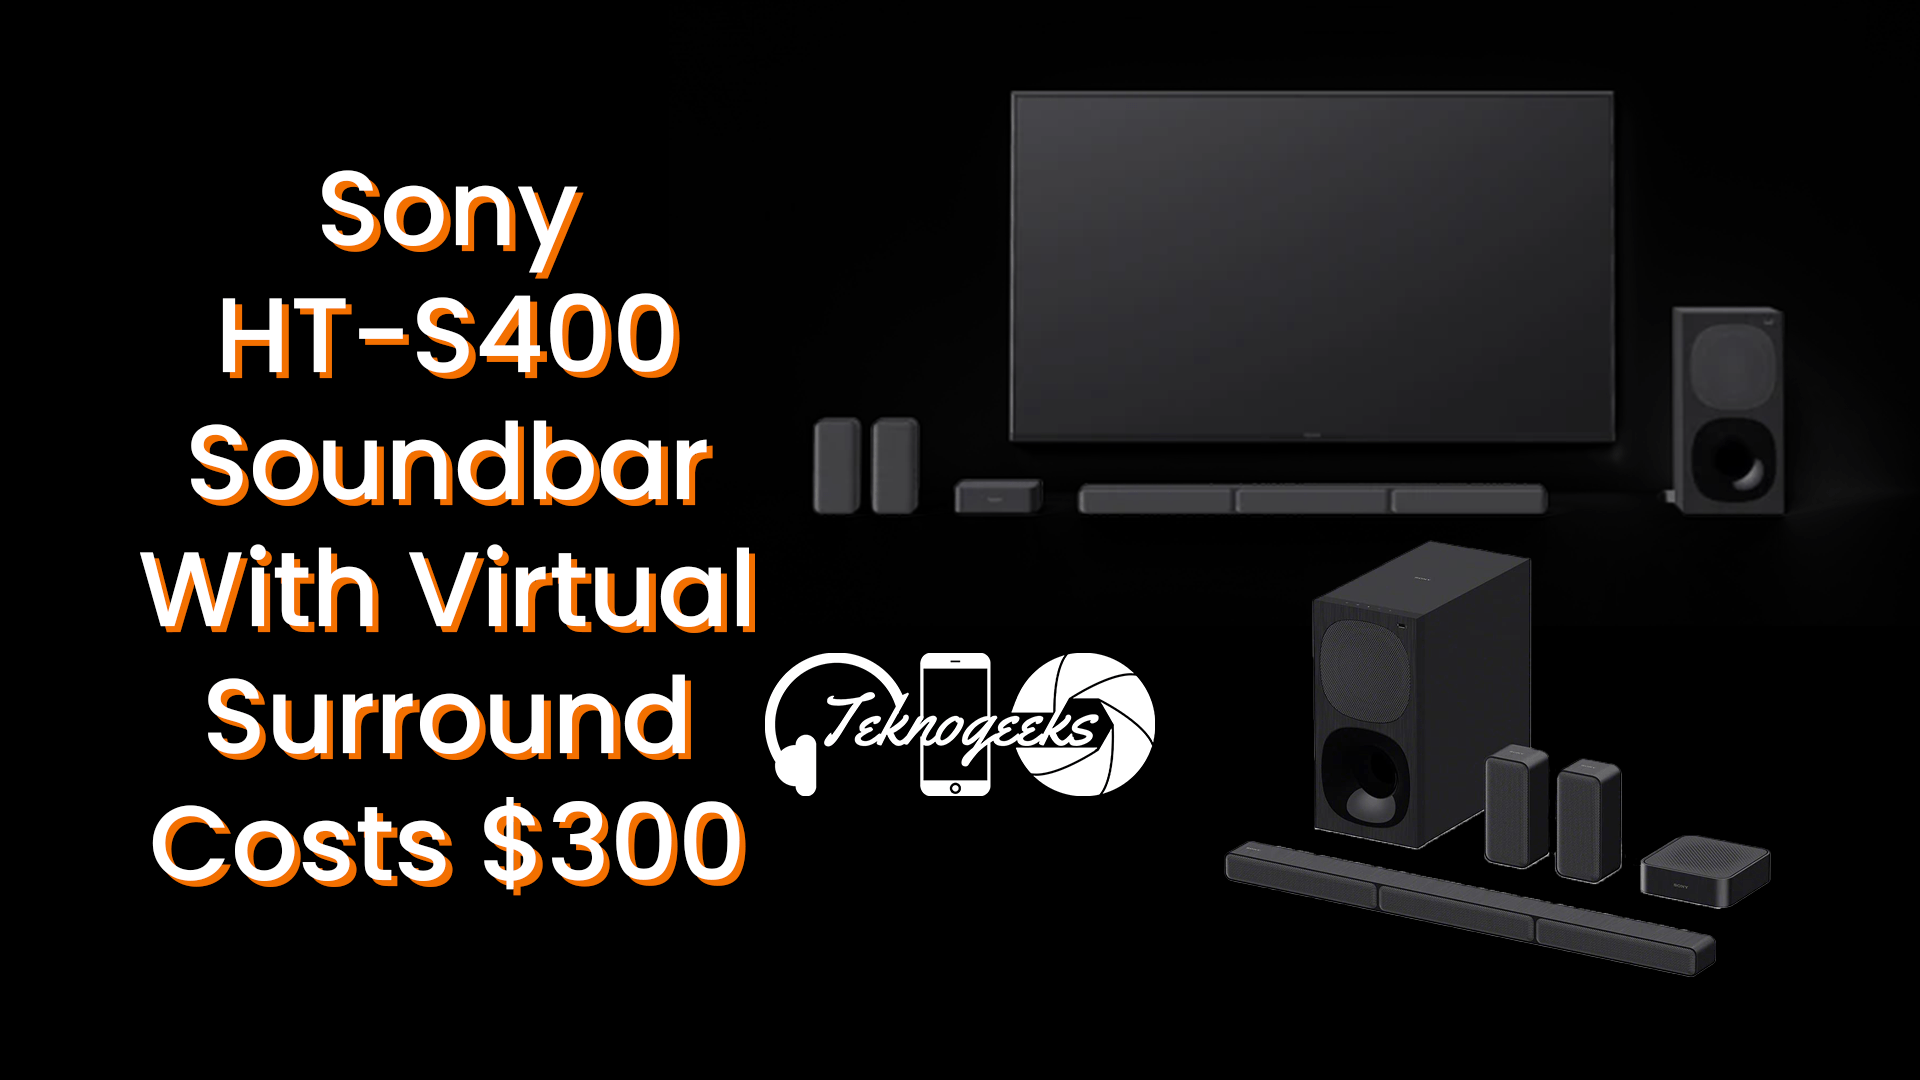 Sony HT-S400 soundbar with Virtual Surround costs $300